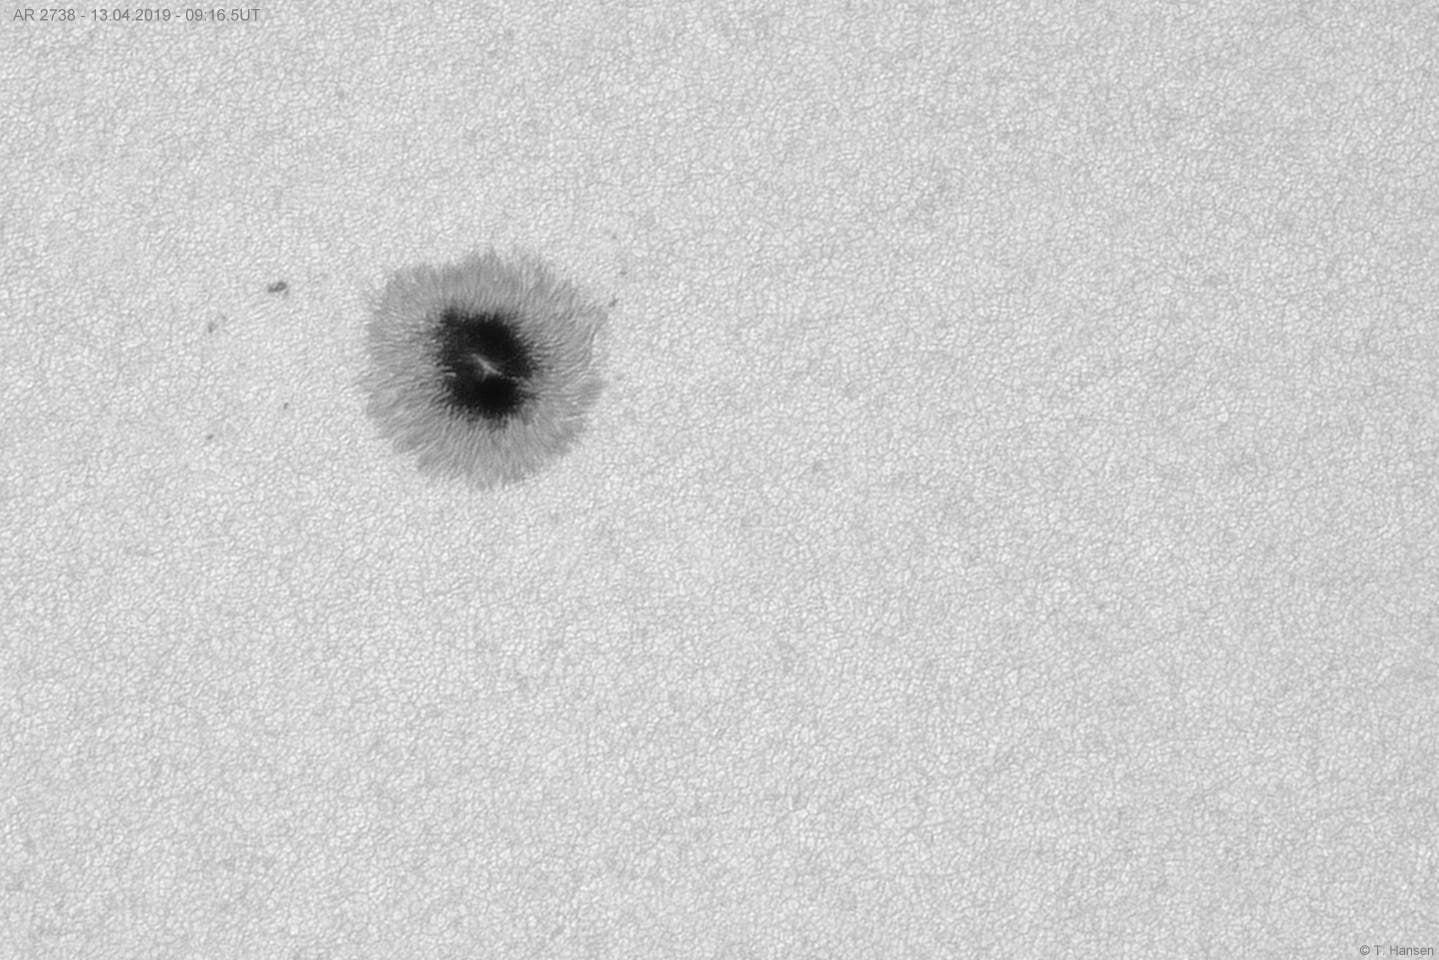 Sonnenfleck AR 2738 am 13. April 2019